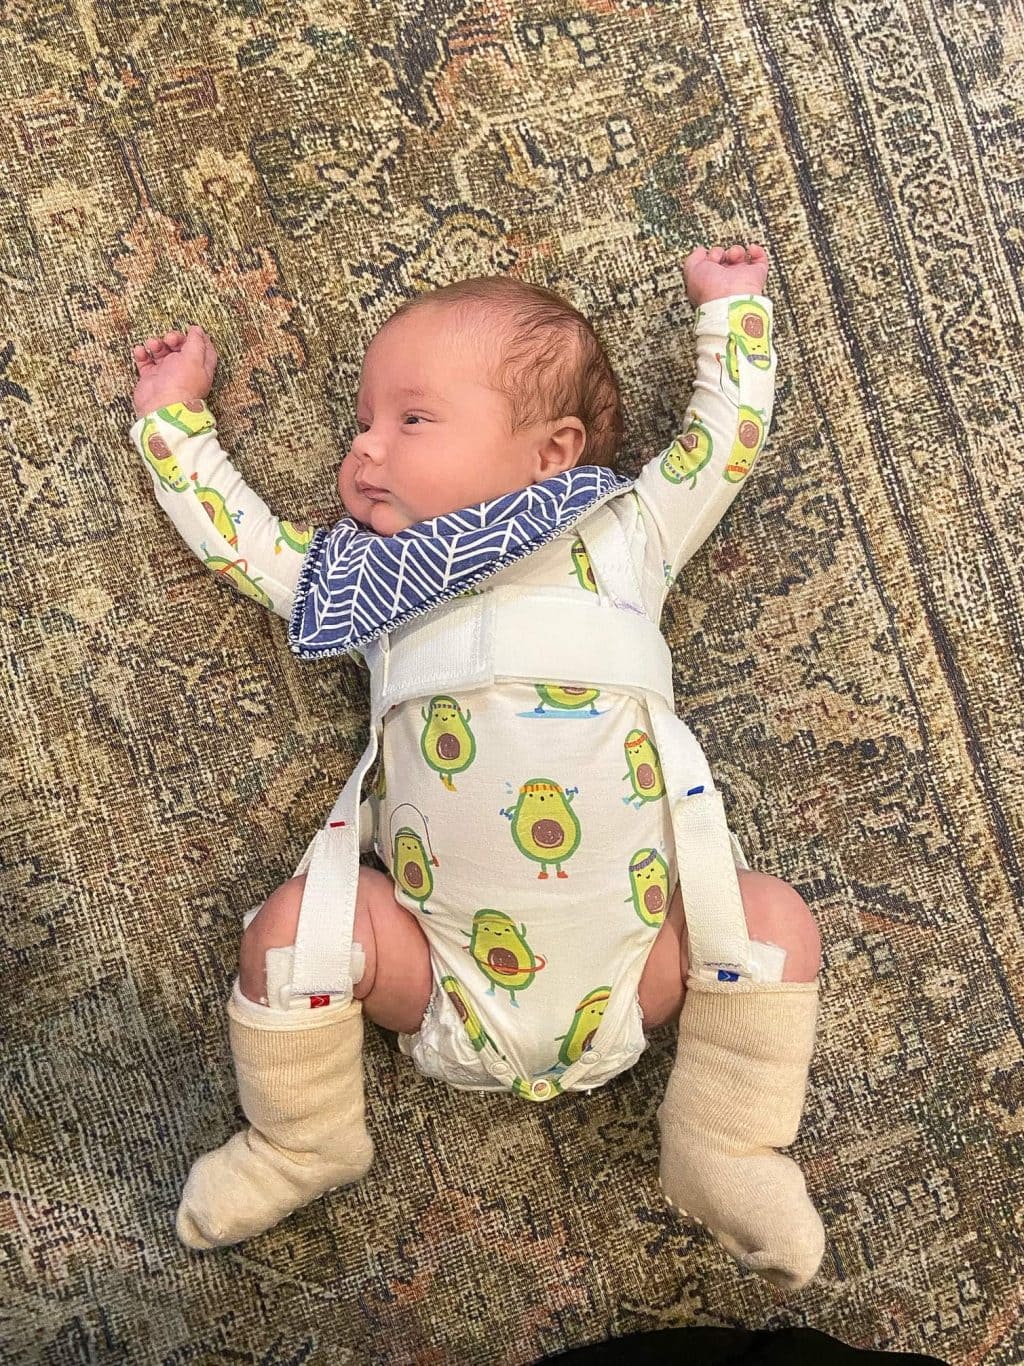 Infant hip dysplasia, wearing a Pavlik harness